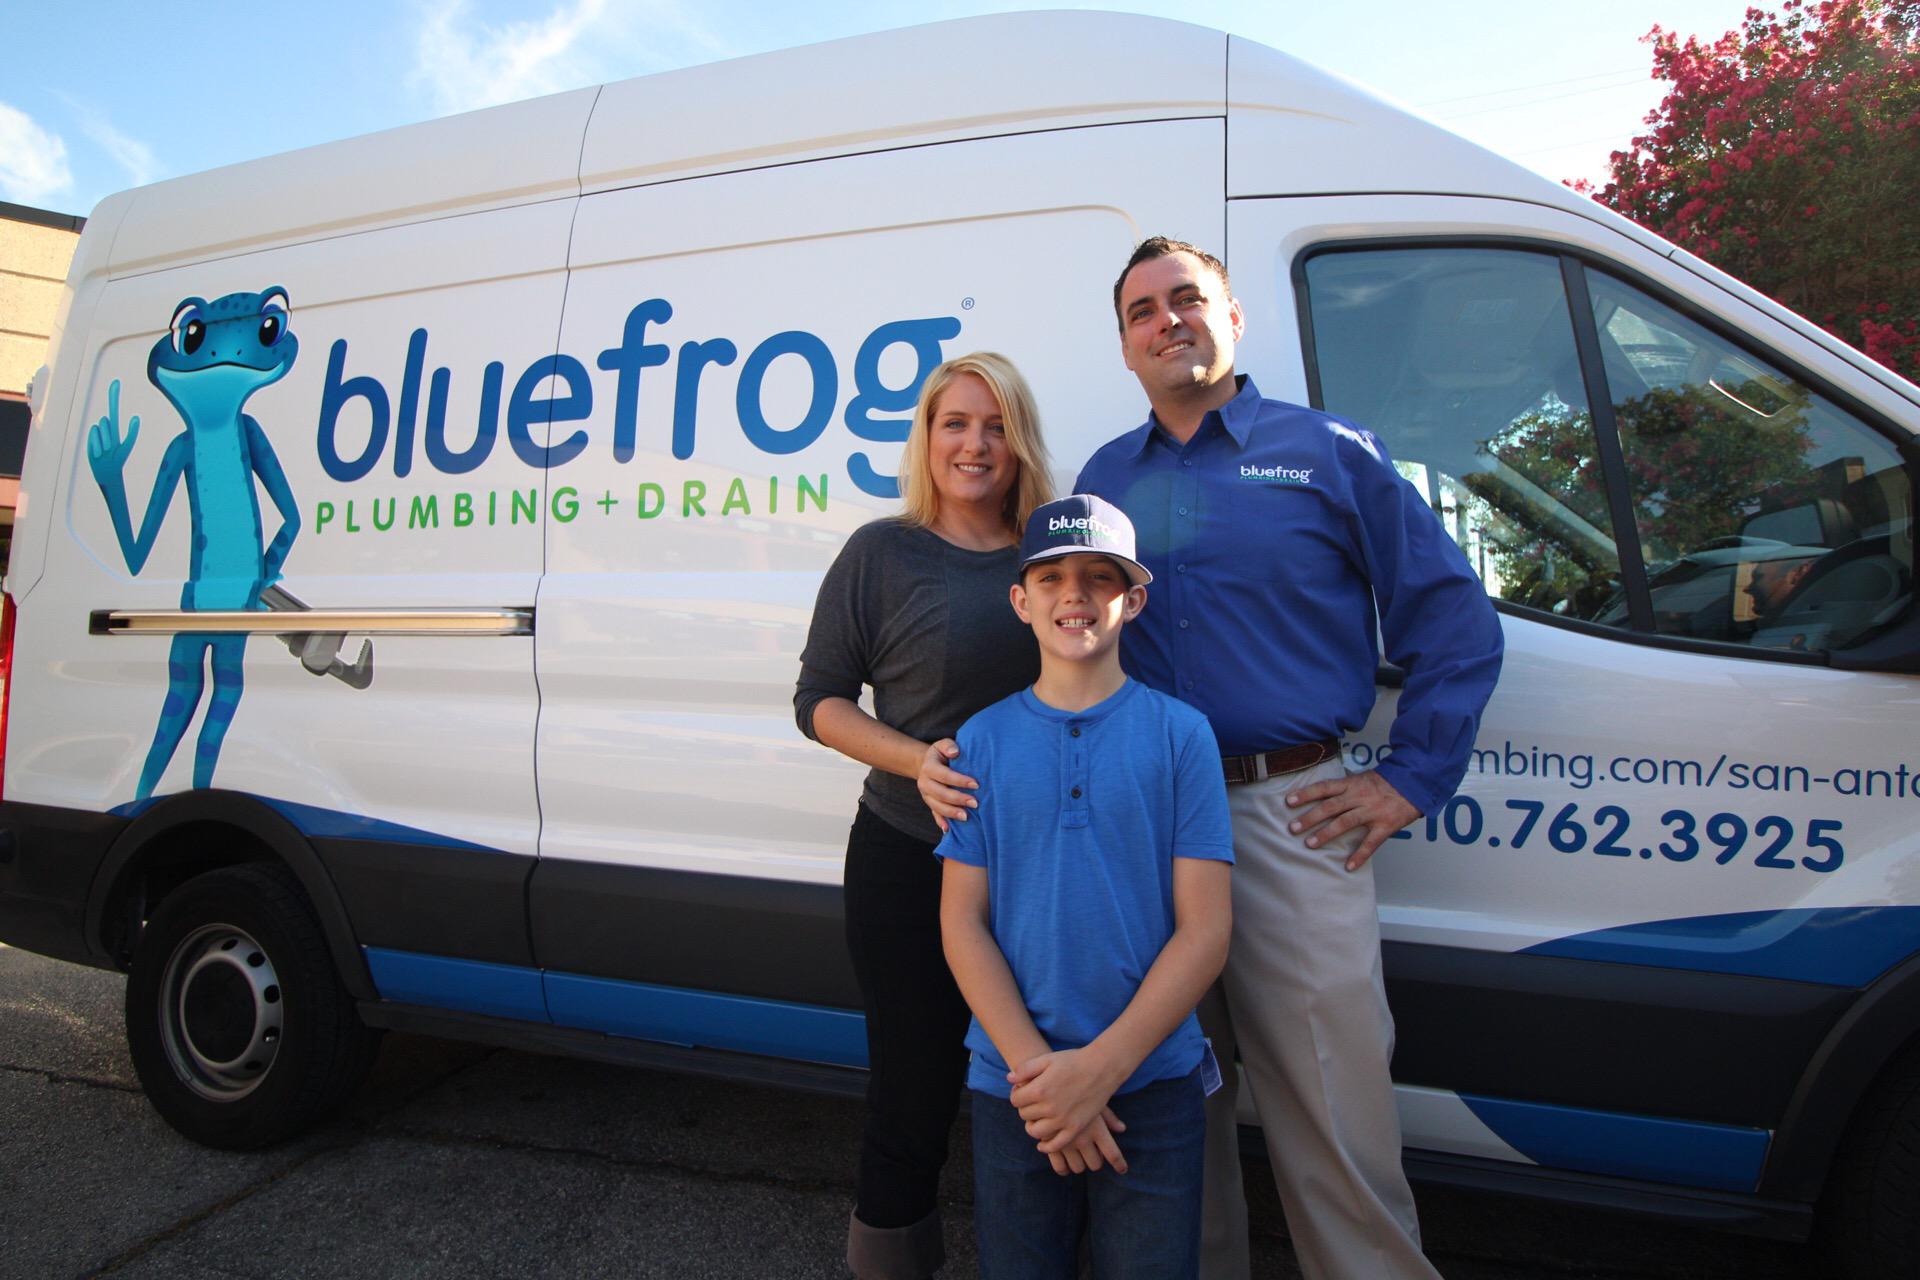 The amazing bluefrog Plumbing + Drain of San Antonio family with one if the plumbing repair trucks.